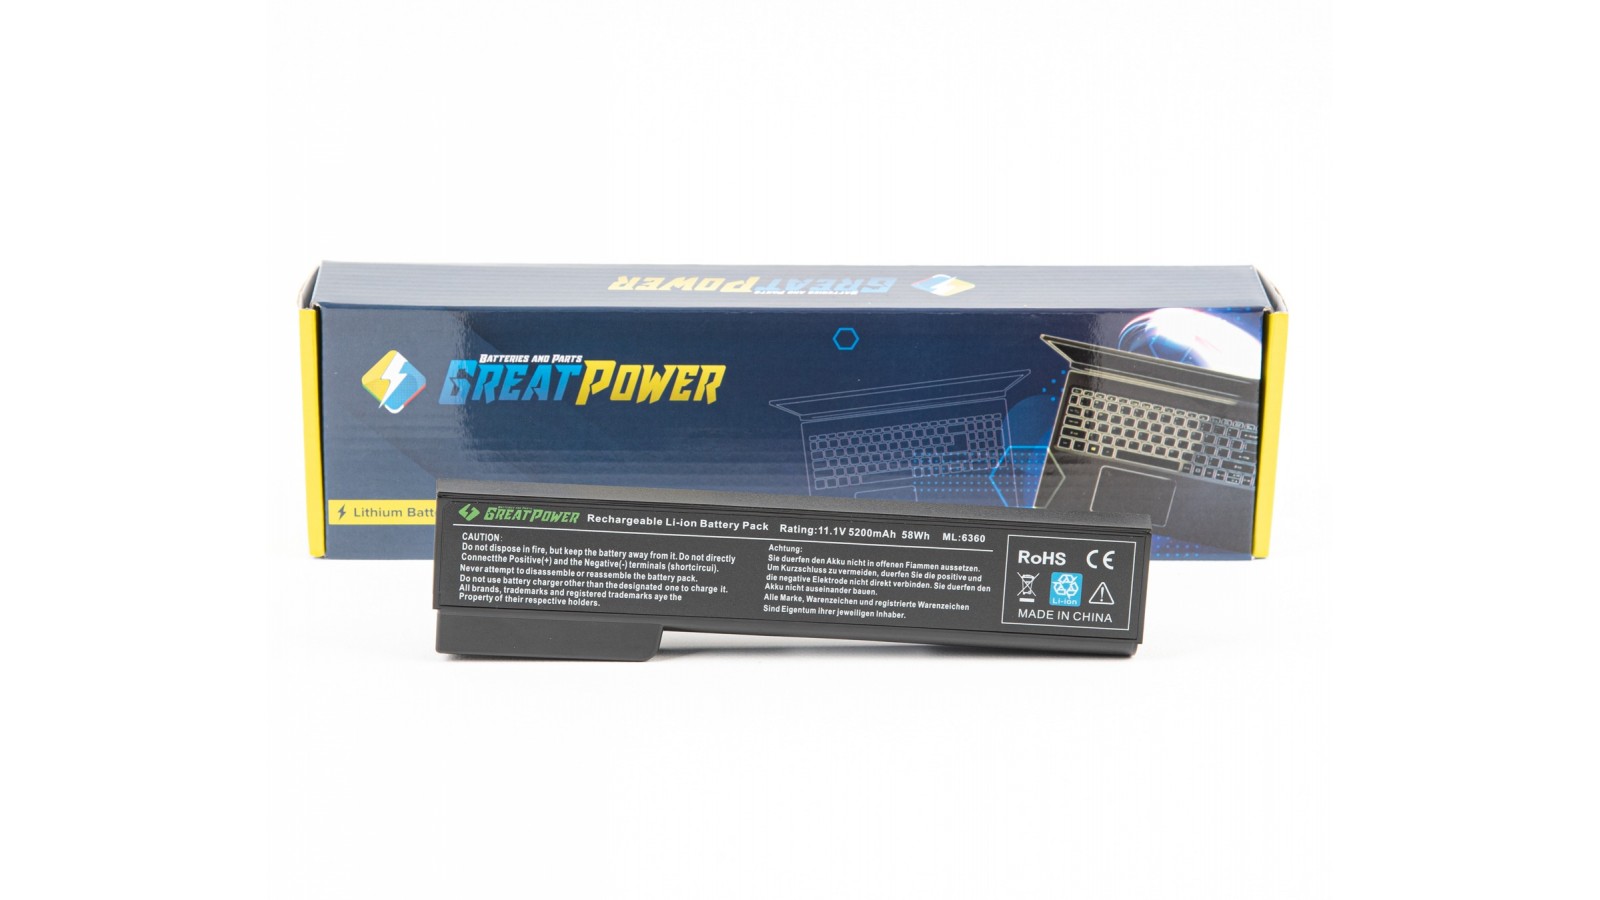 Batteria 5200mAh compatibile HP EliteBook 8460p 8460w 8470p 8560p